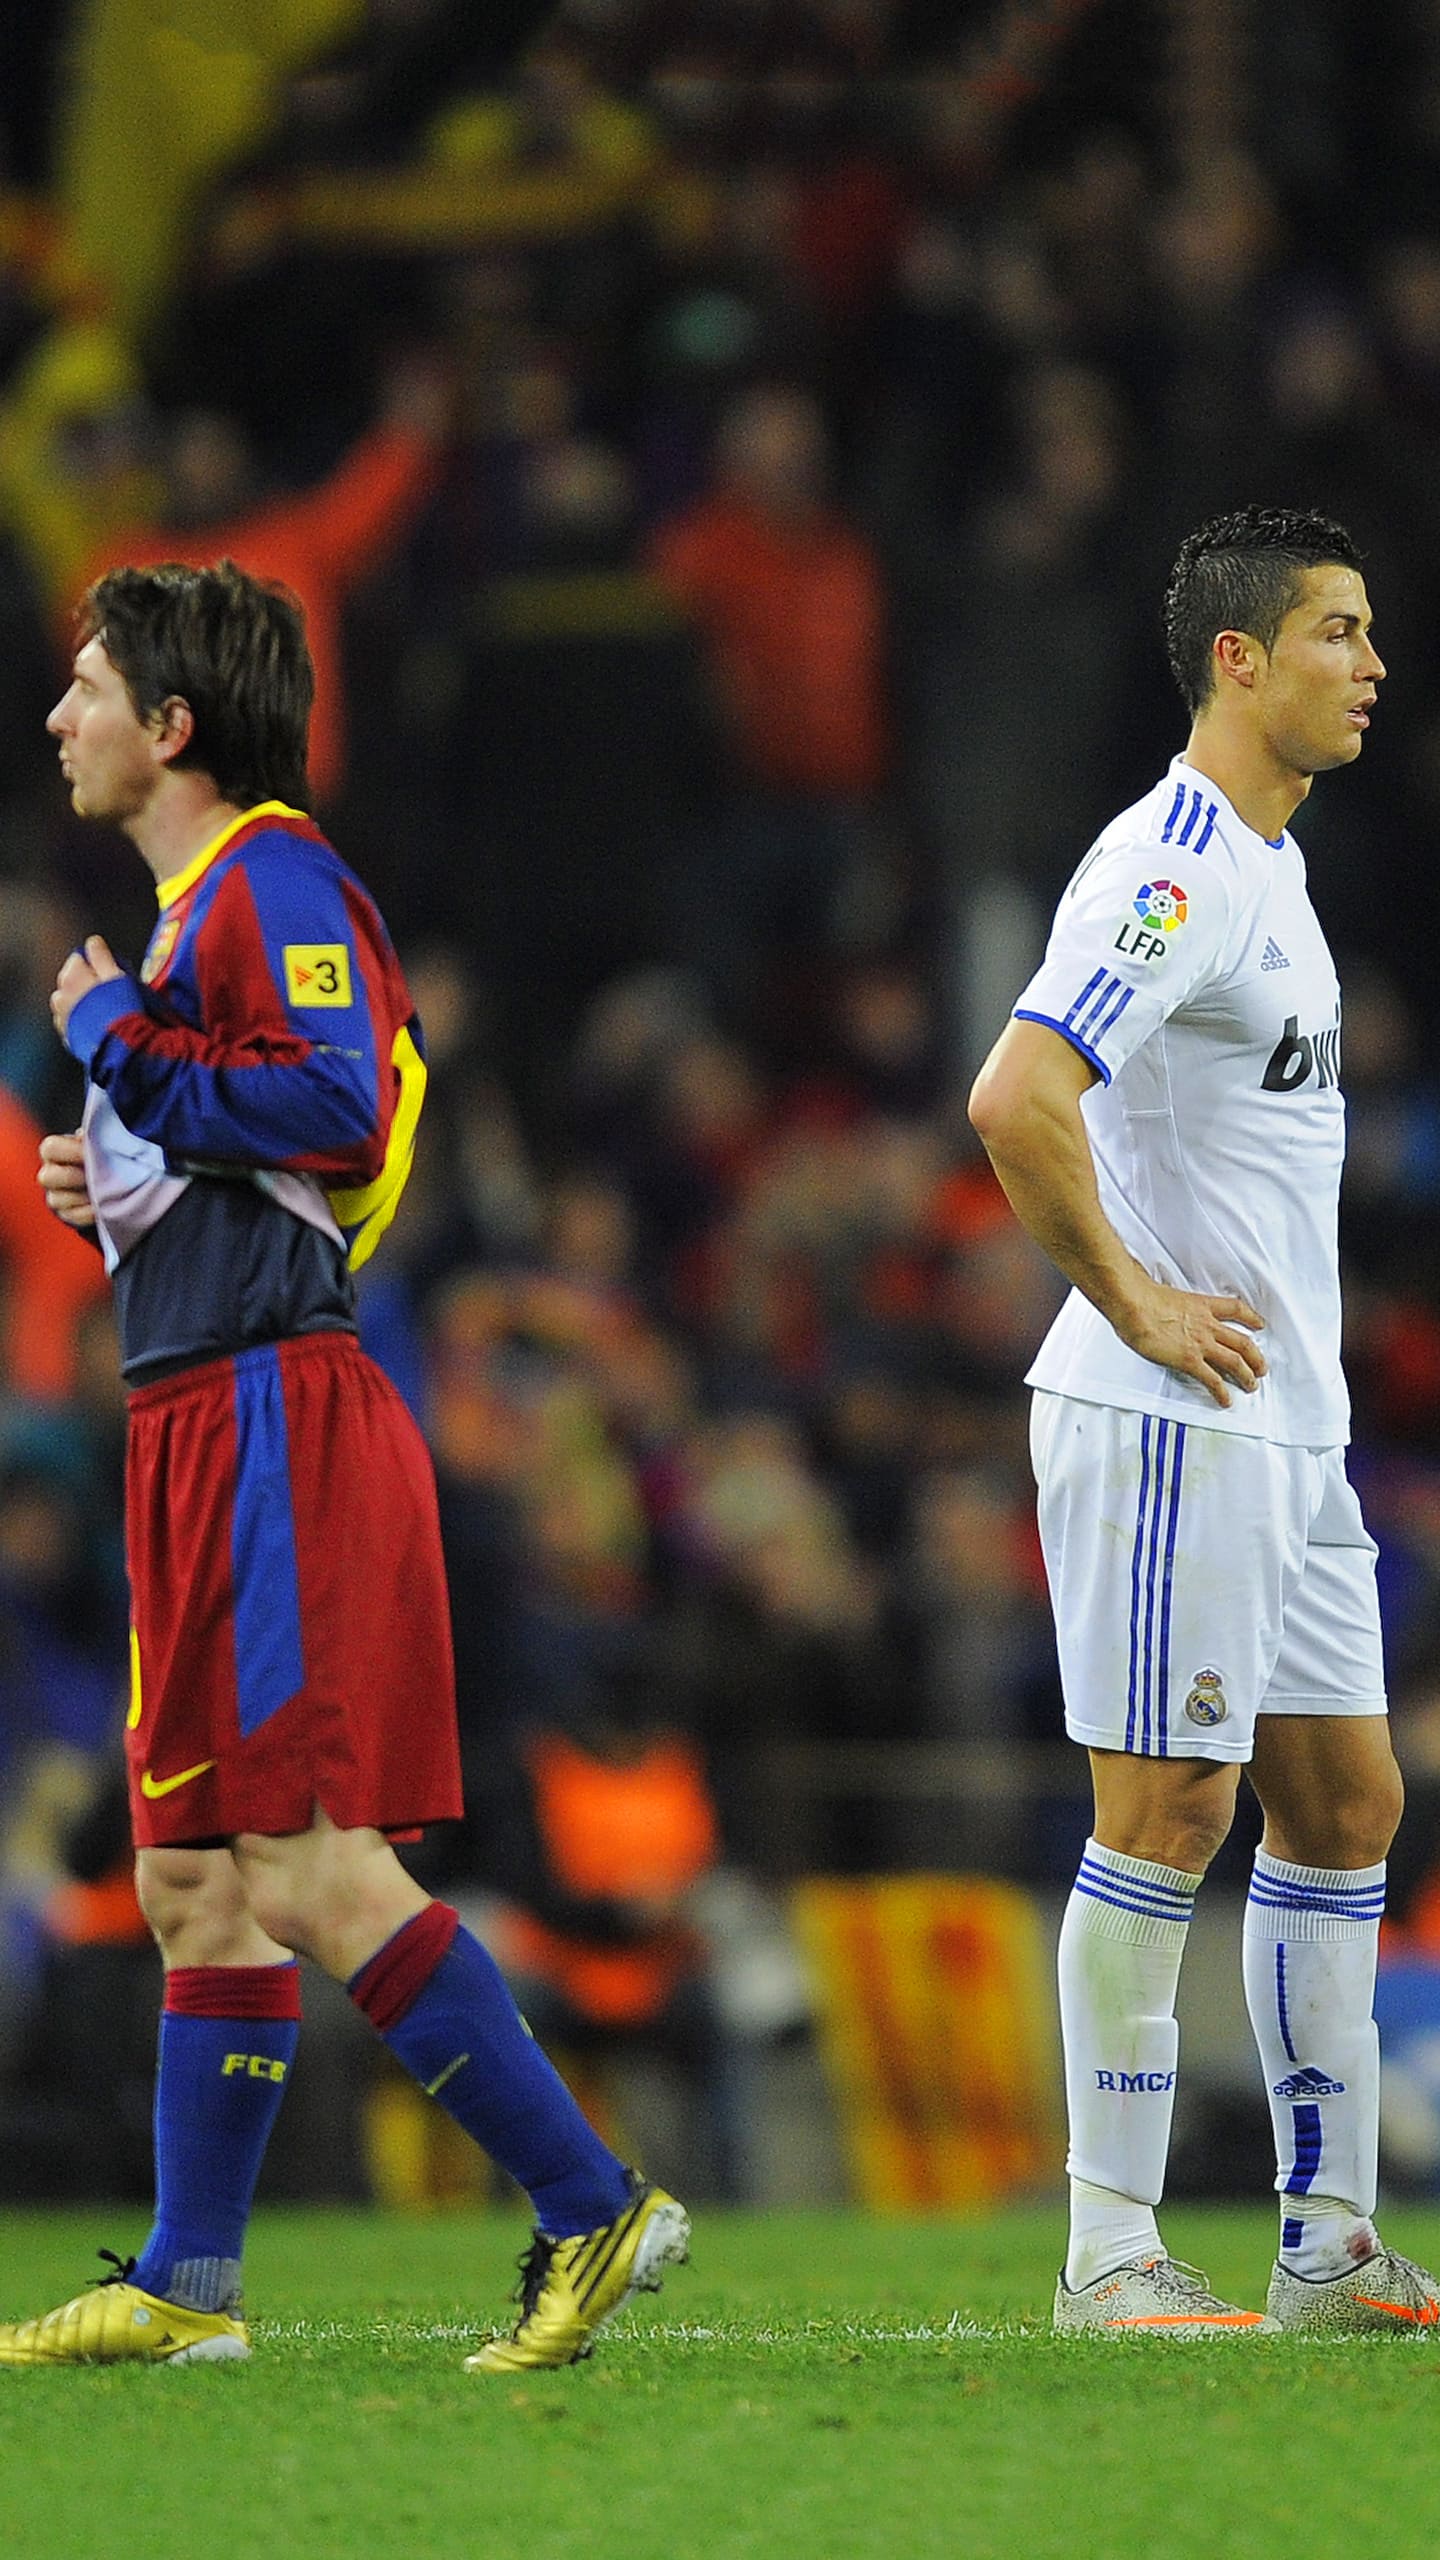 Messi and Ronaldo Wallpapers